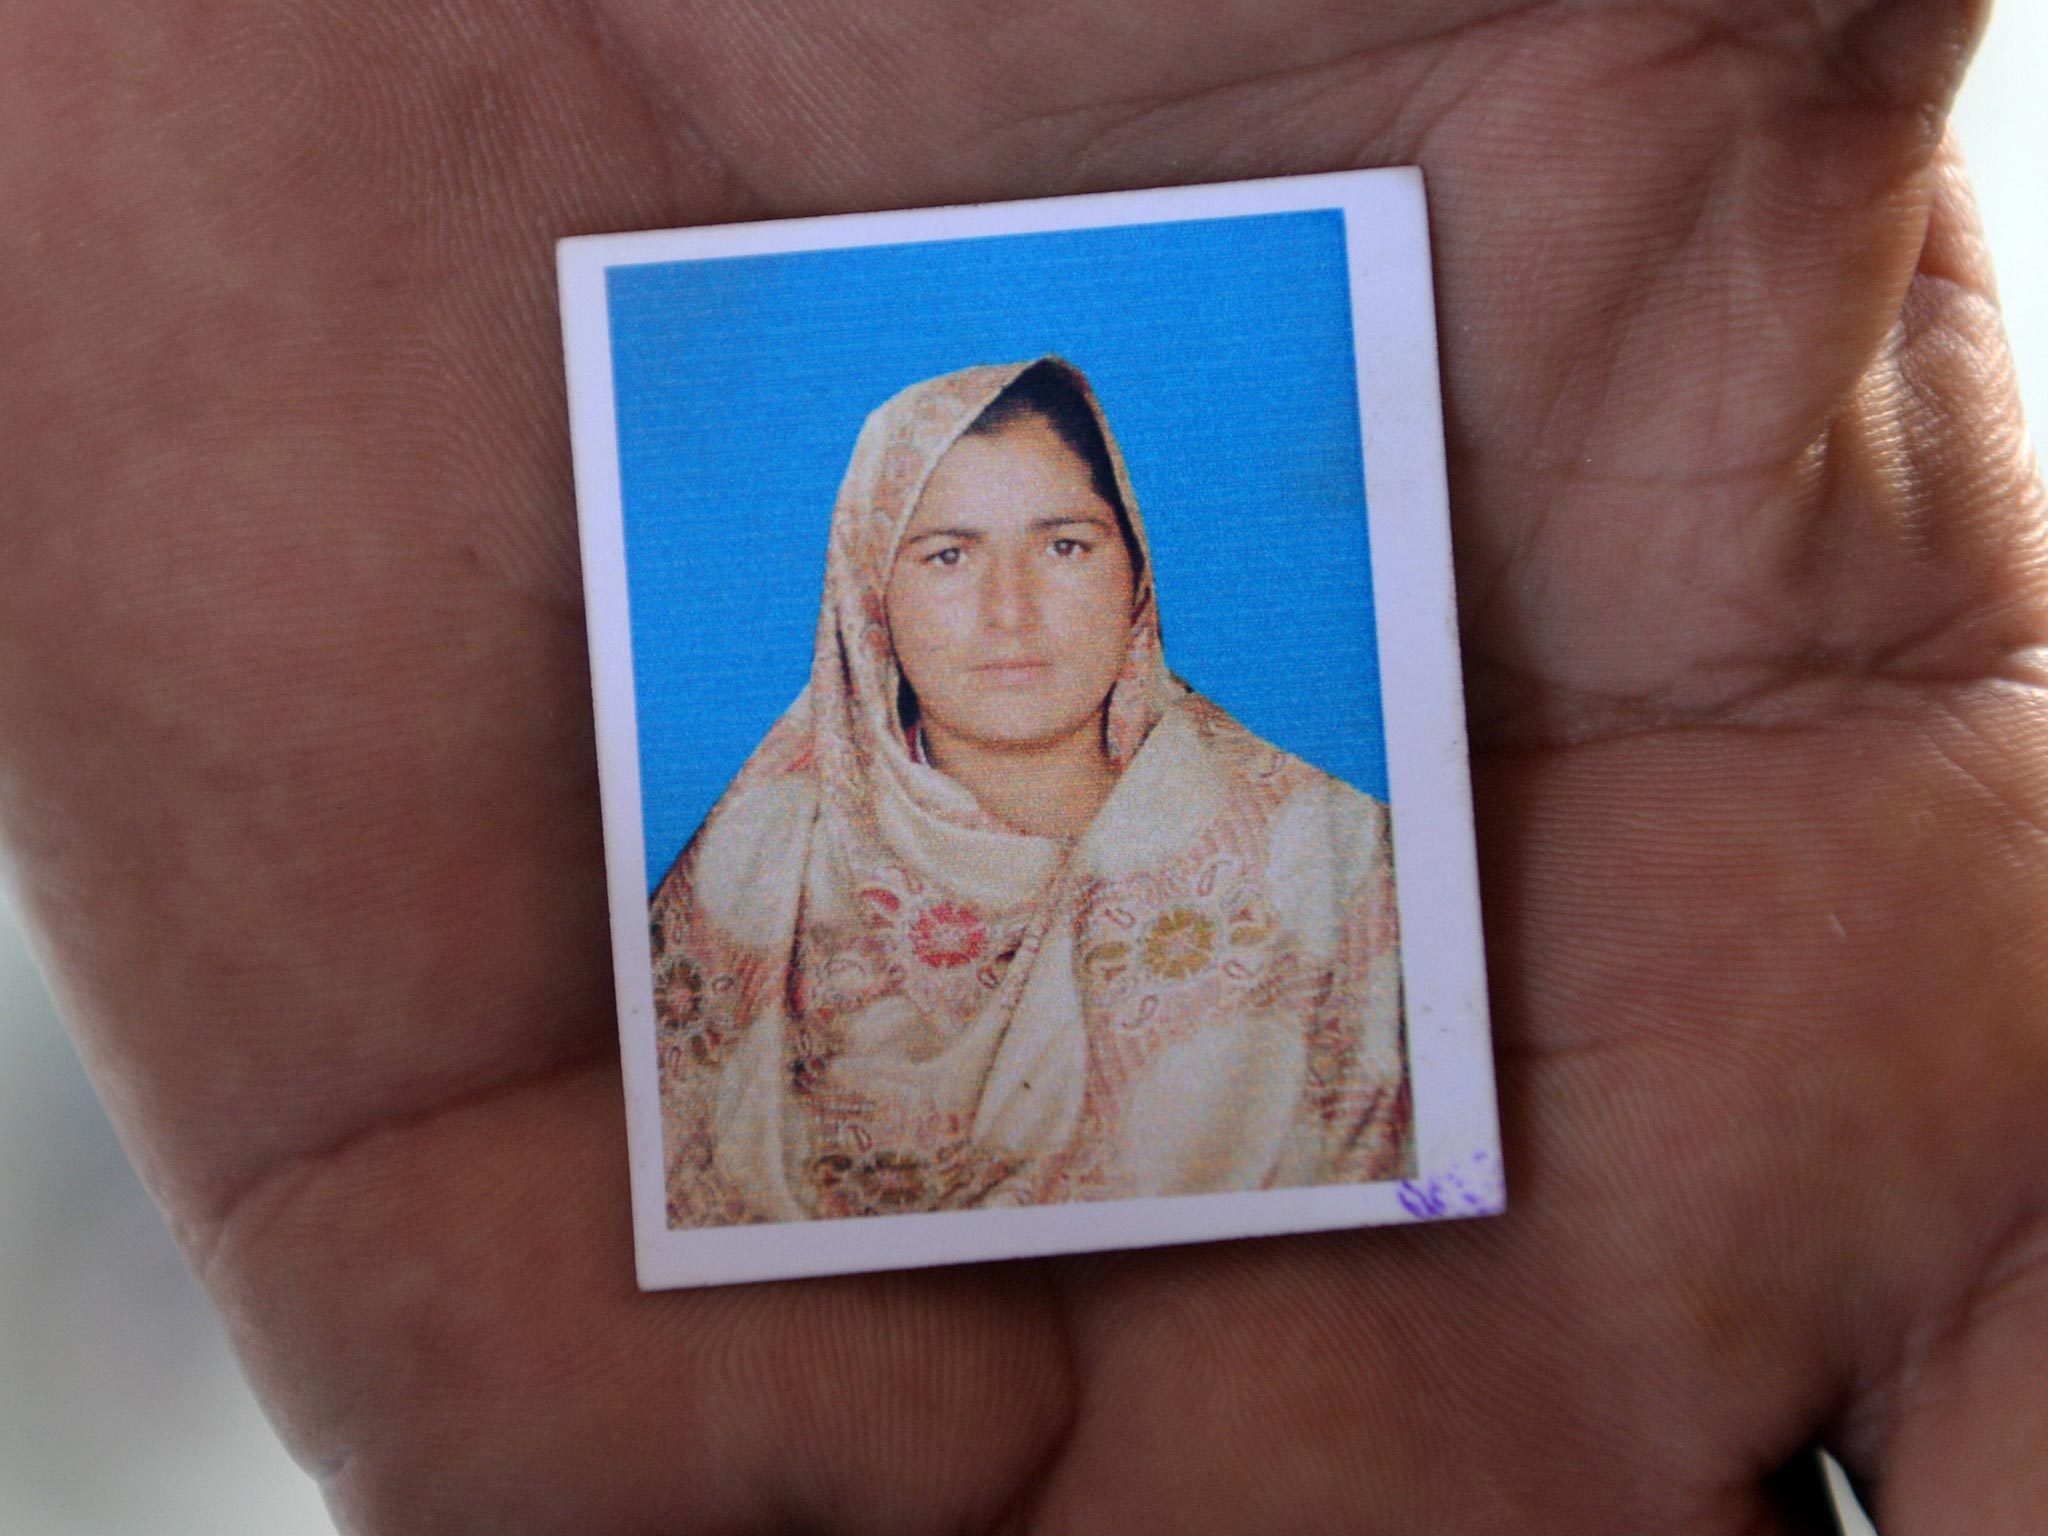 Farzana was three months pregnant when she was killed